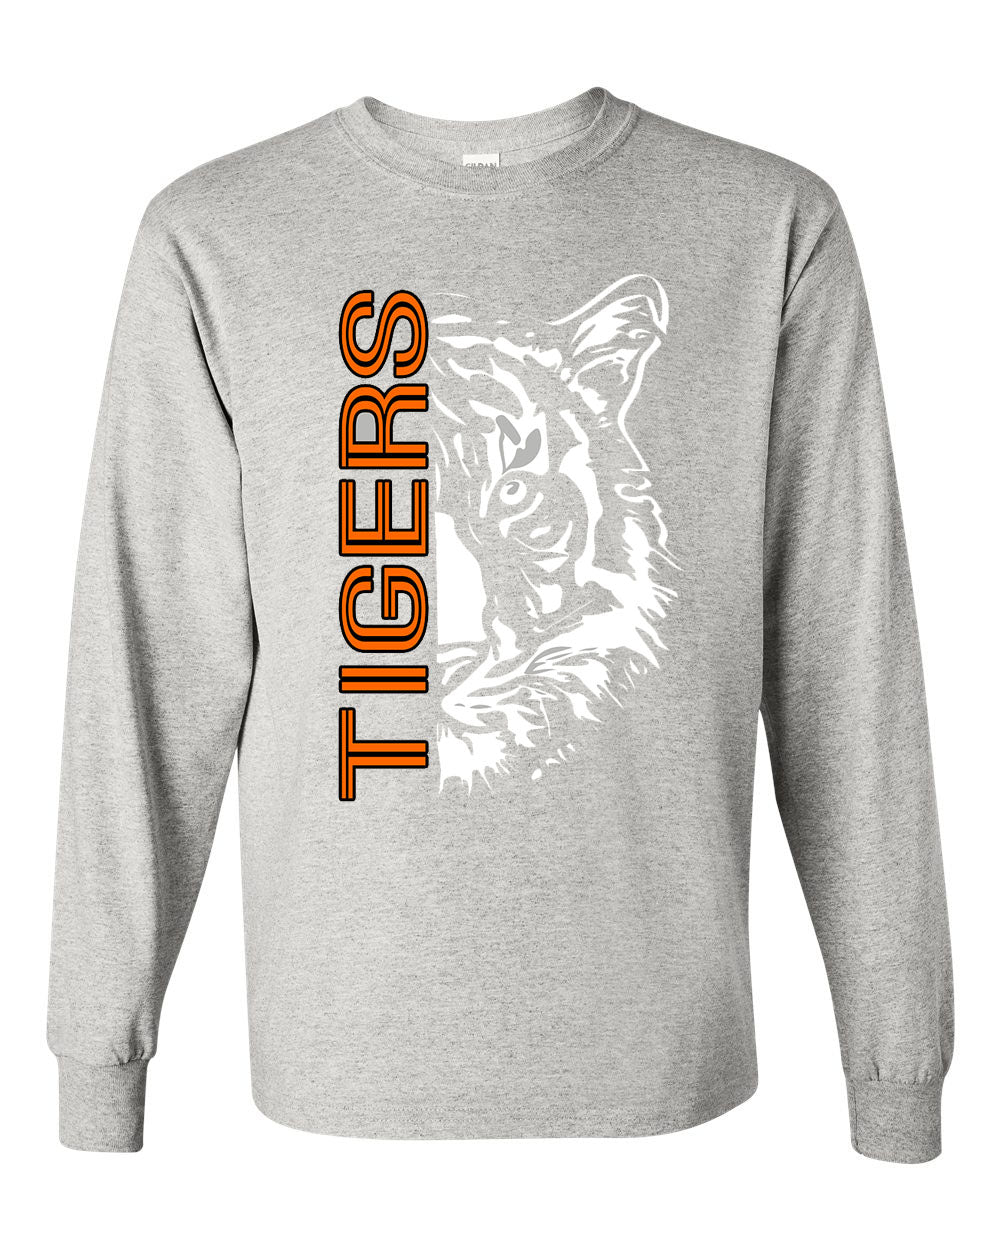 Tigers Design 6 Long Sleeve Shirt